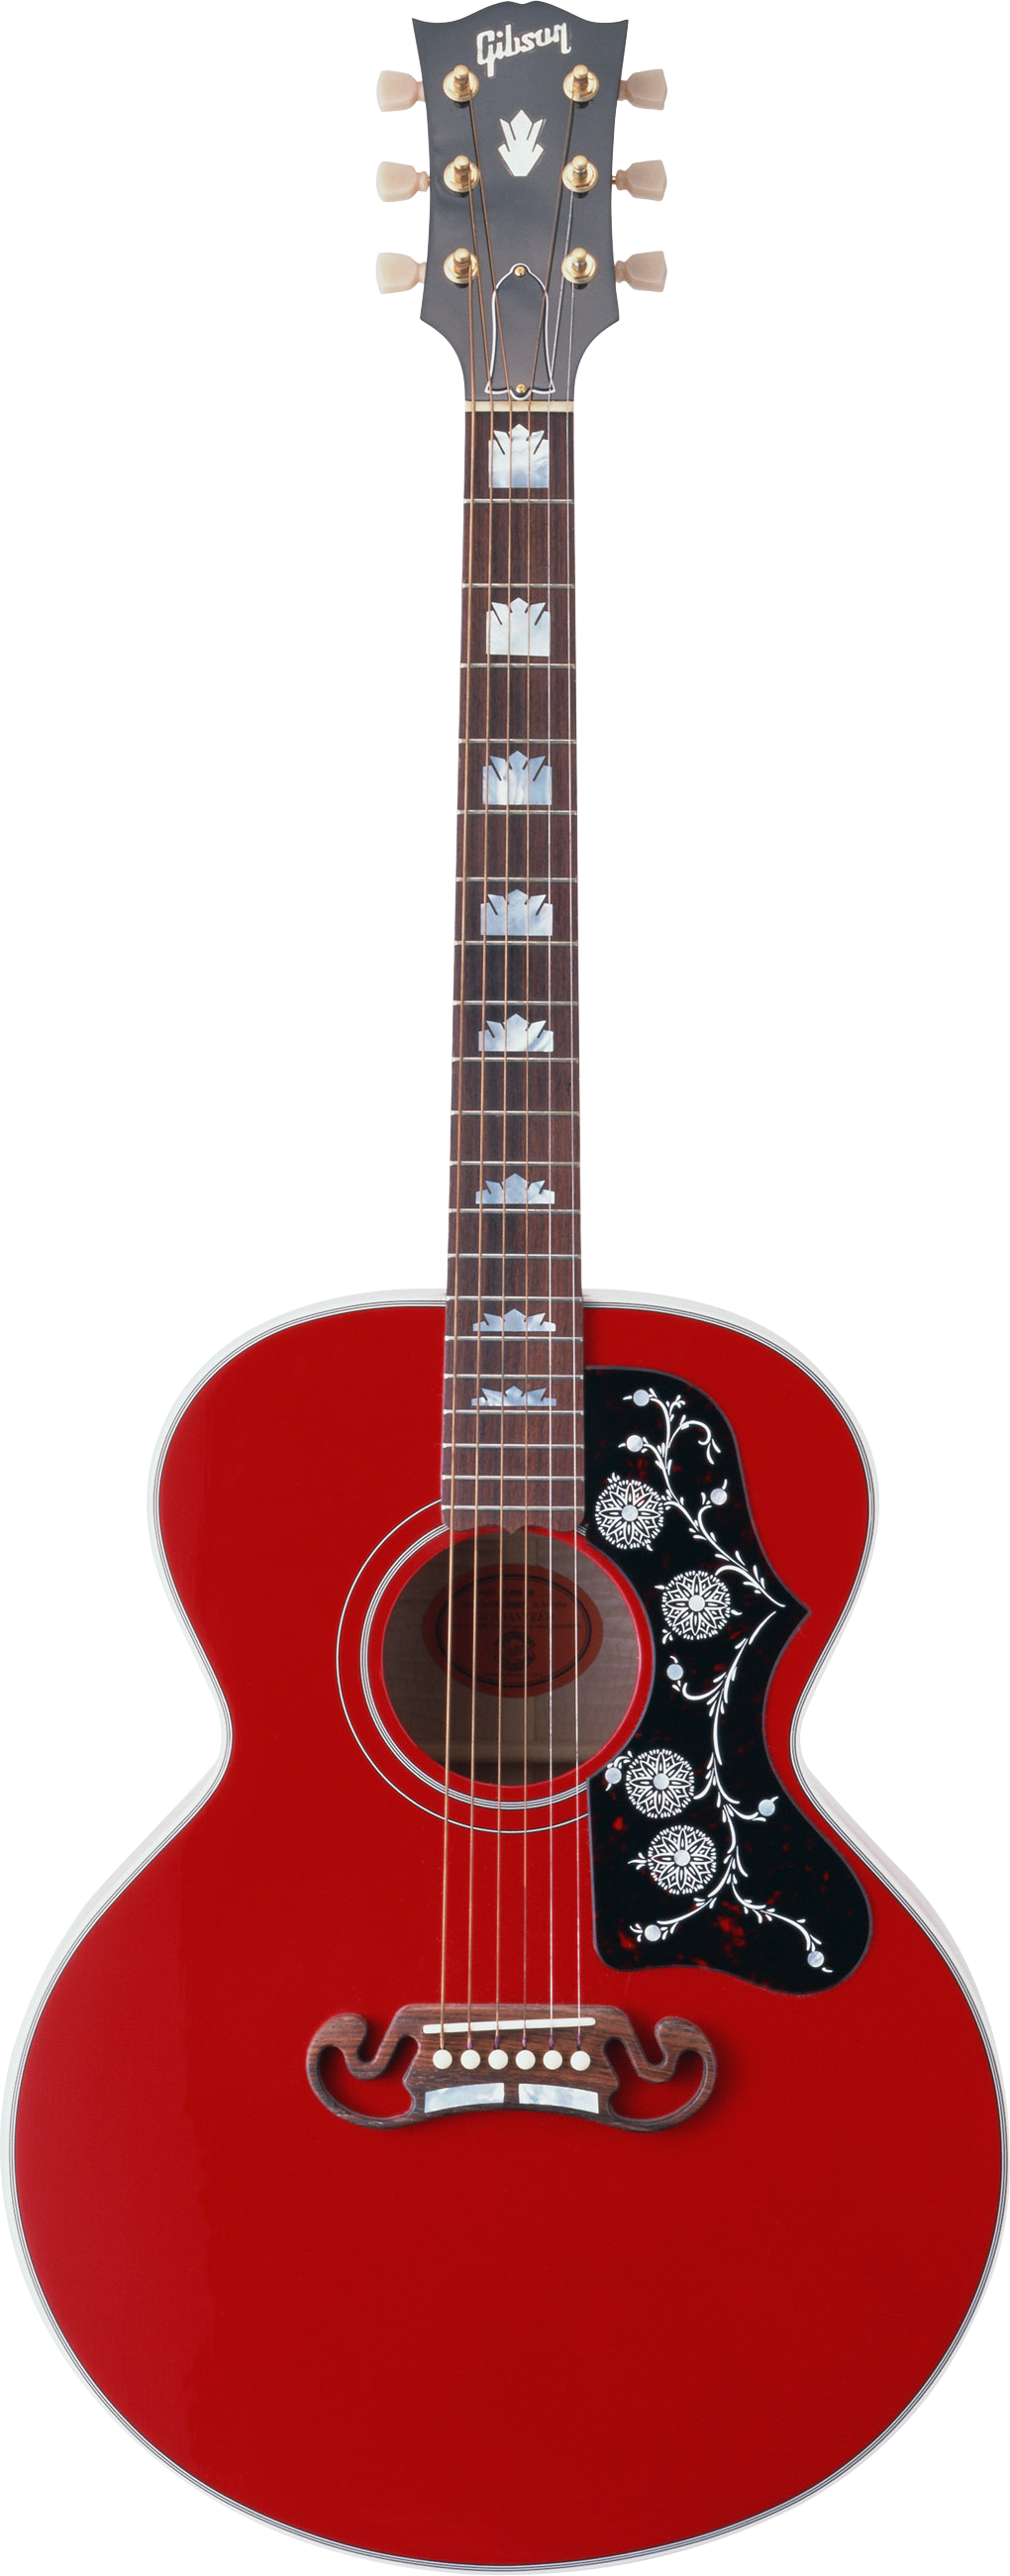 Rotes E-Gitarre-Png-Hintergrund-Bild